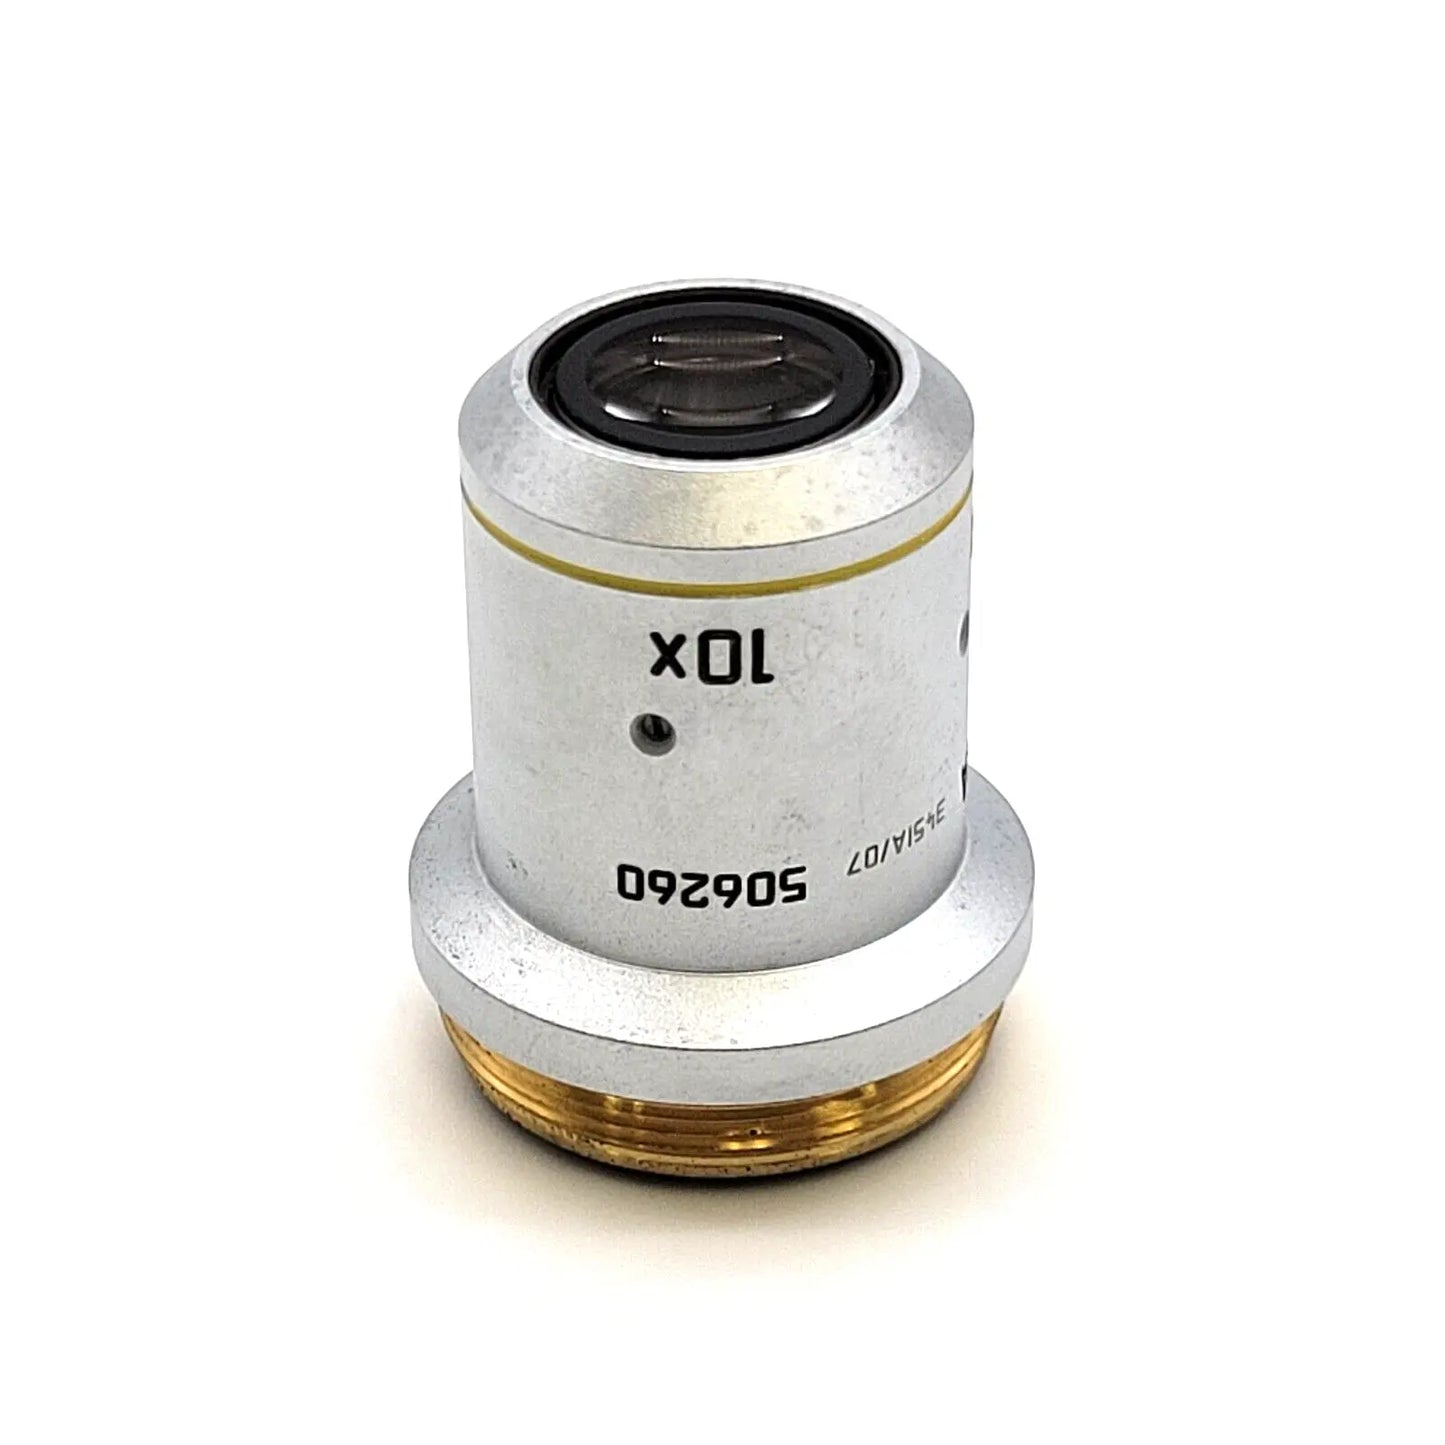 Leica Microscope Objective N Plan 10x Ph1 ∞/-/B 506260 Phase Contrast - microscopemarketplace